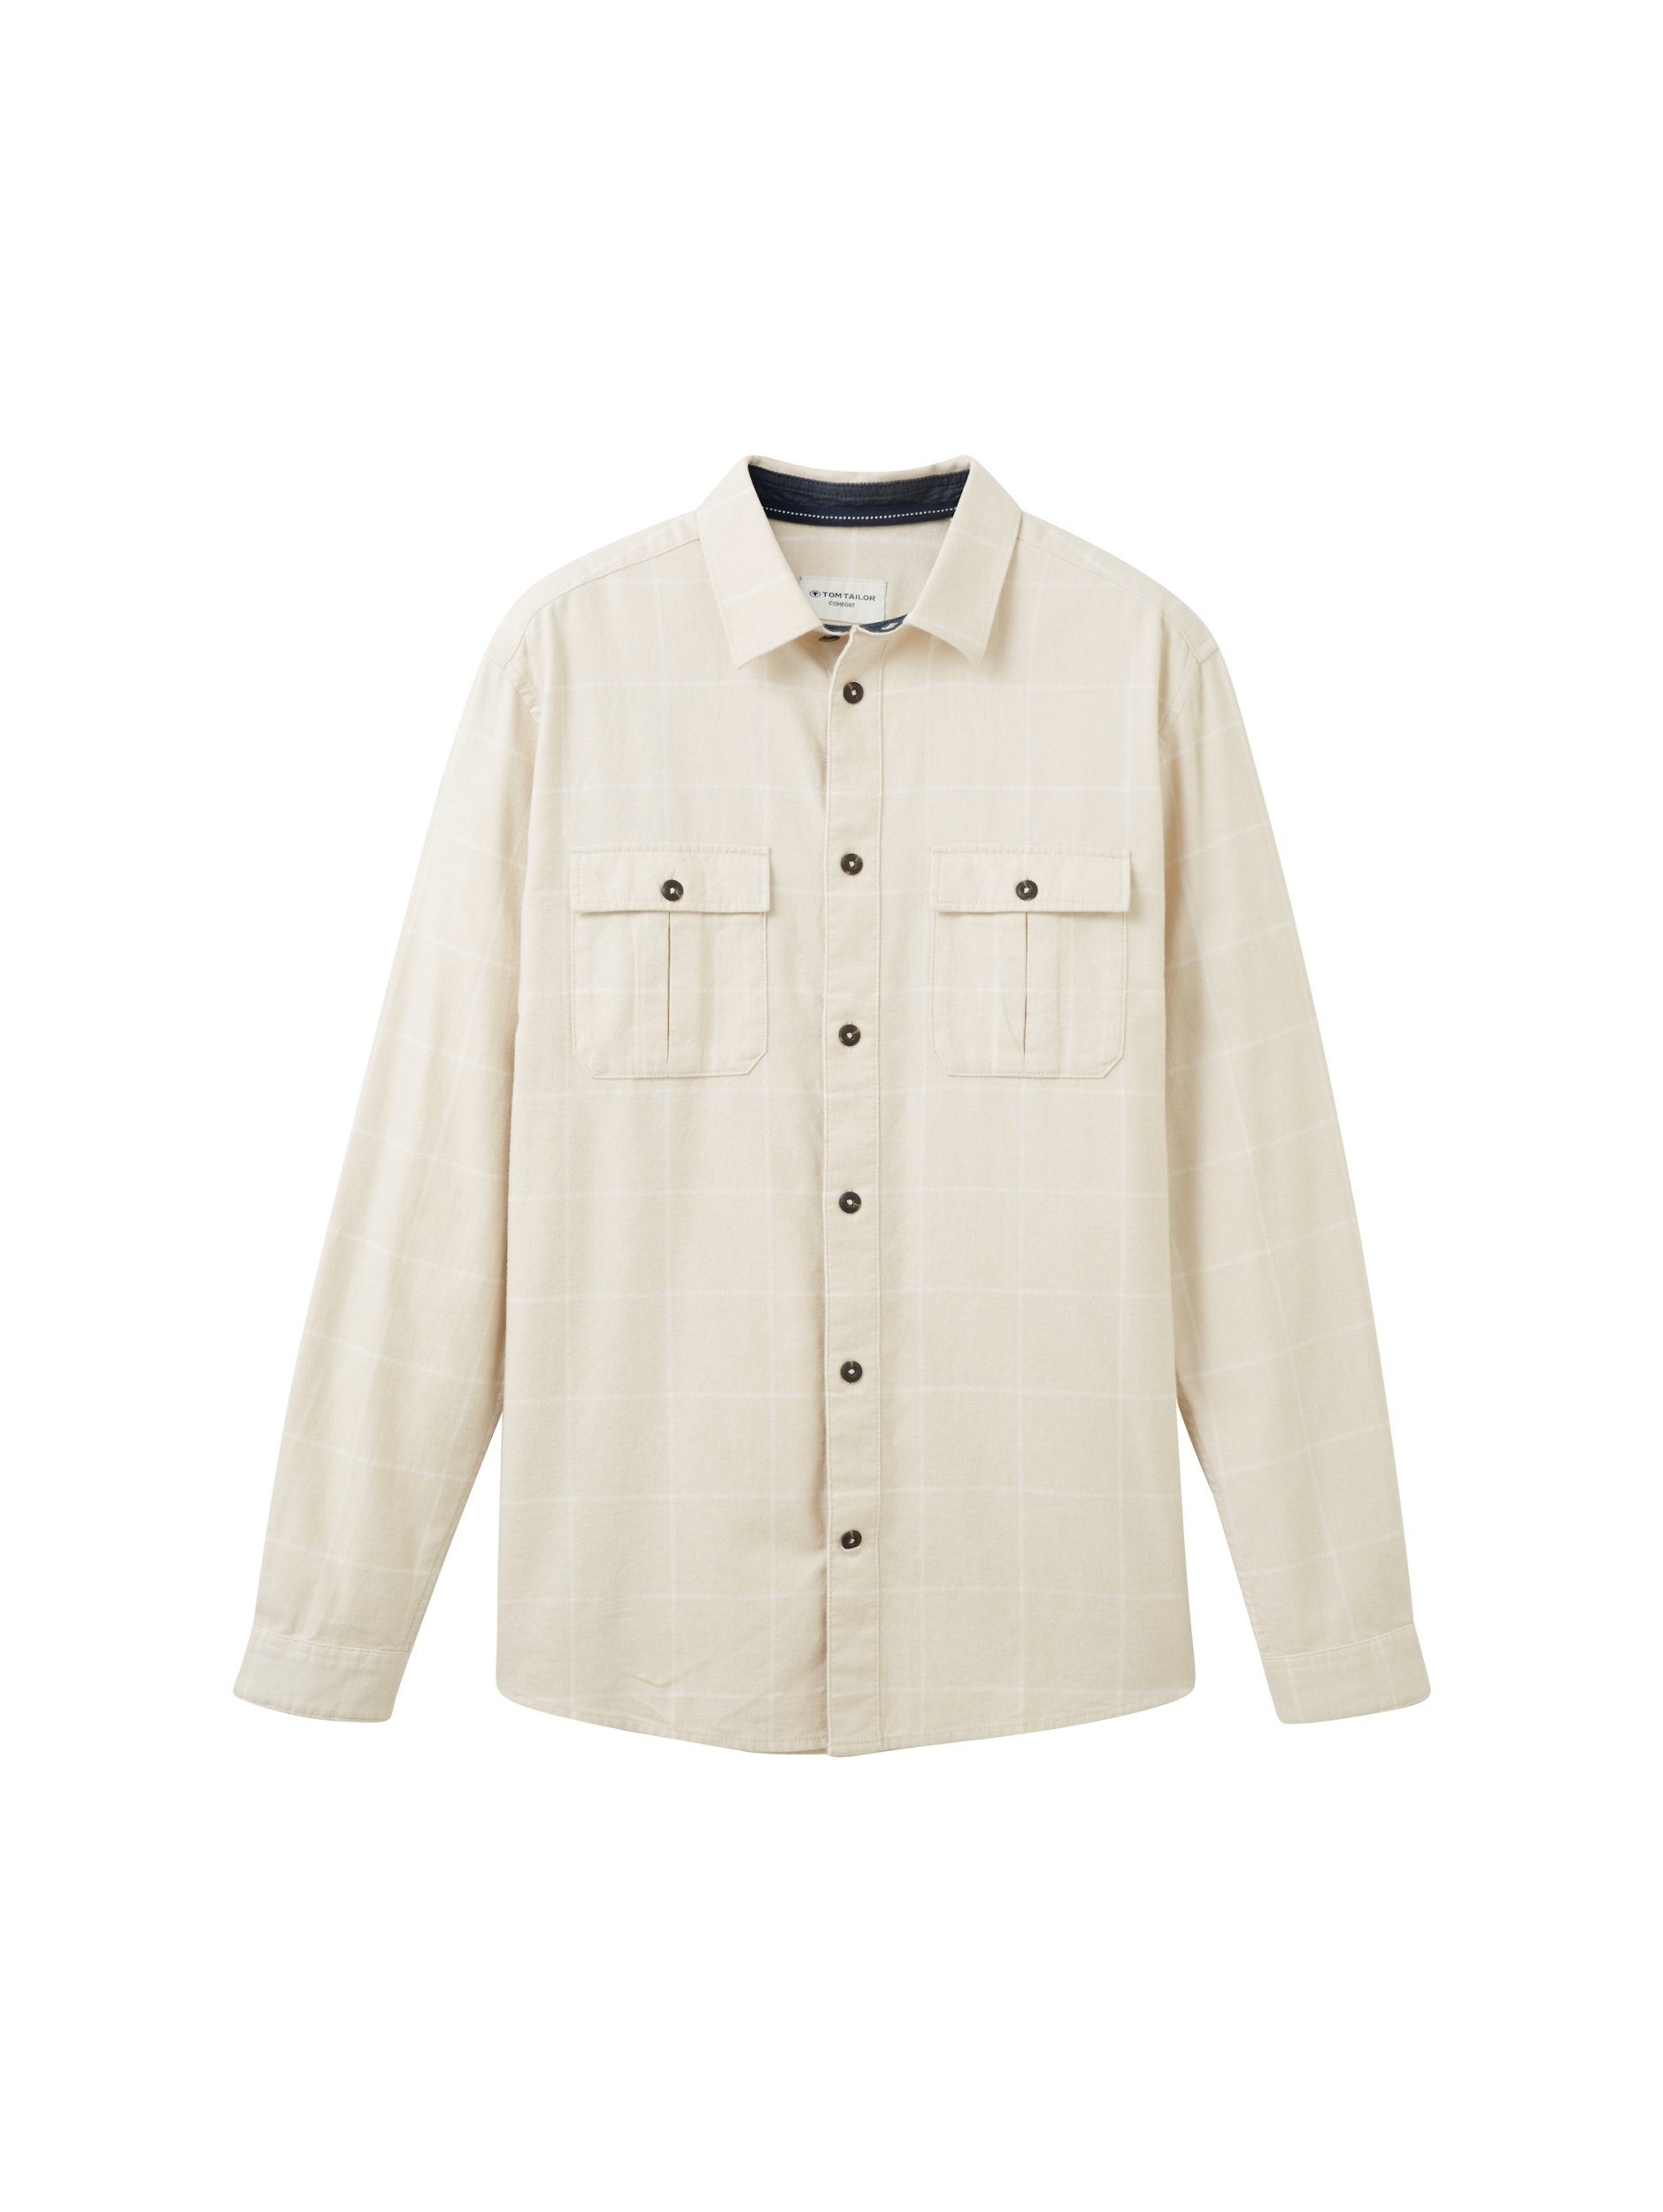 TOM TAILOR Kurzarmshirt comfort tonal checked shirt vintage beige tonal check